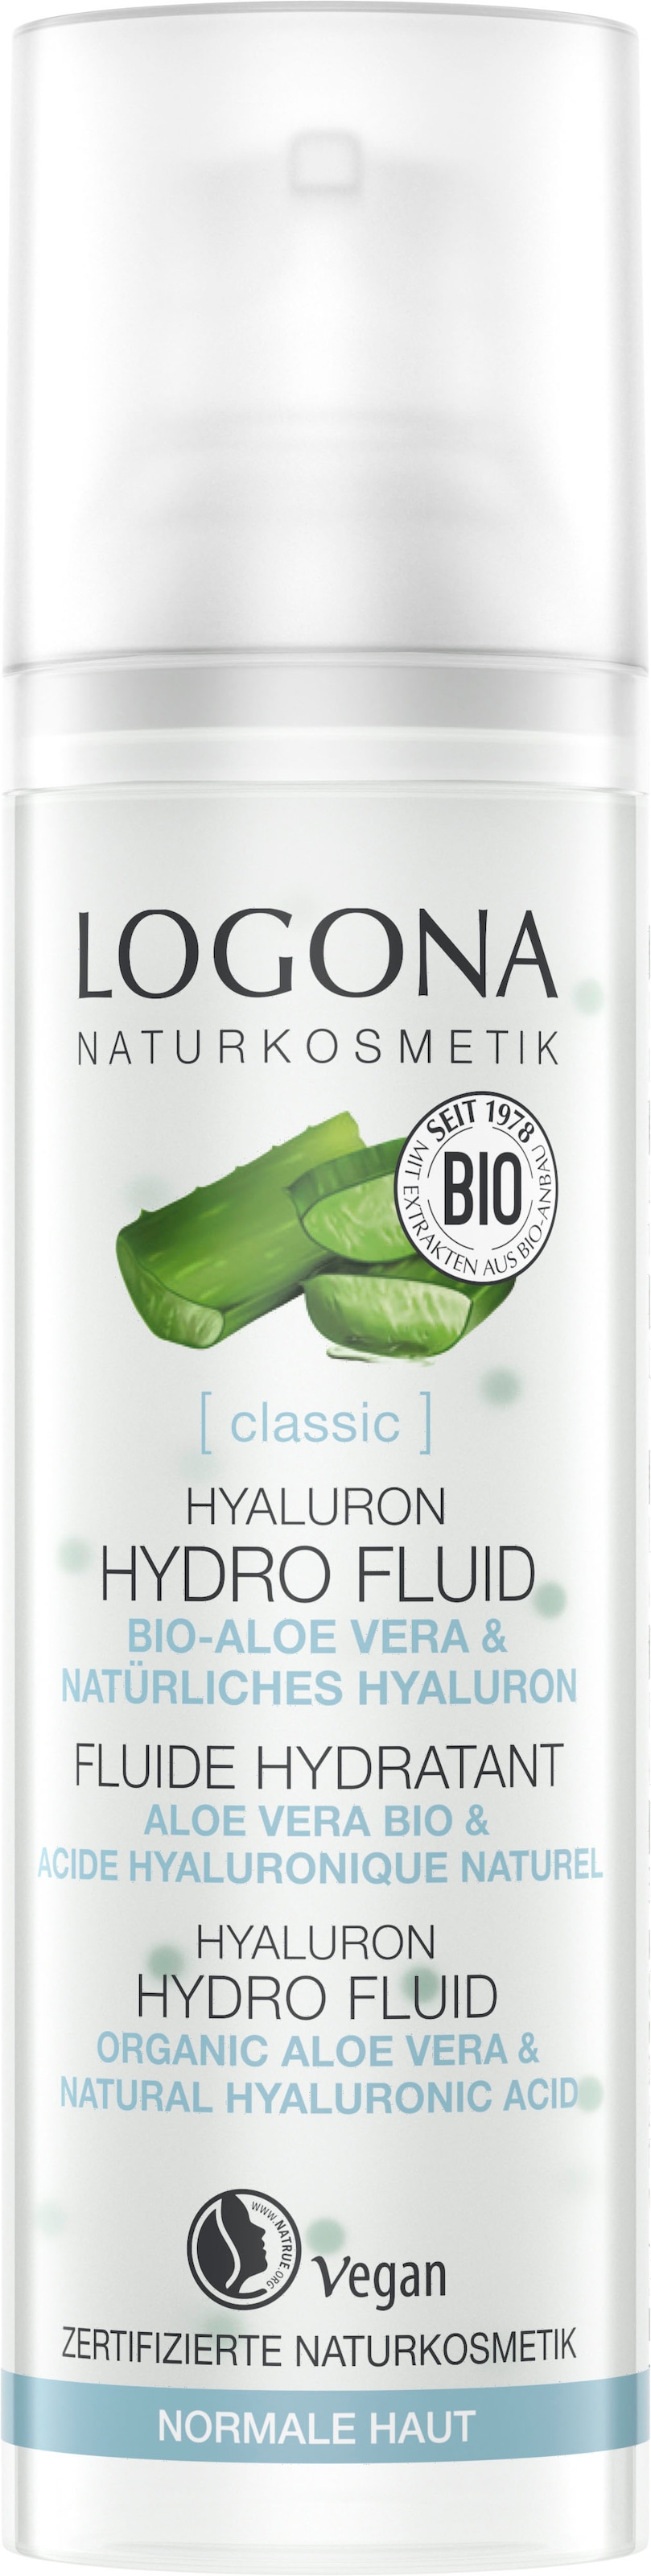 LOGONA Gesichtsfluid »Logona classic Hyaluron ♕ bei Hydro Fluid«